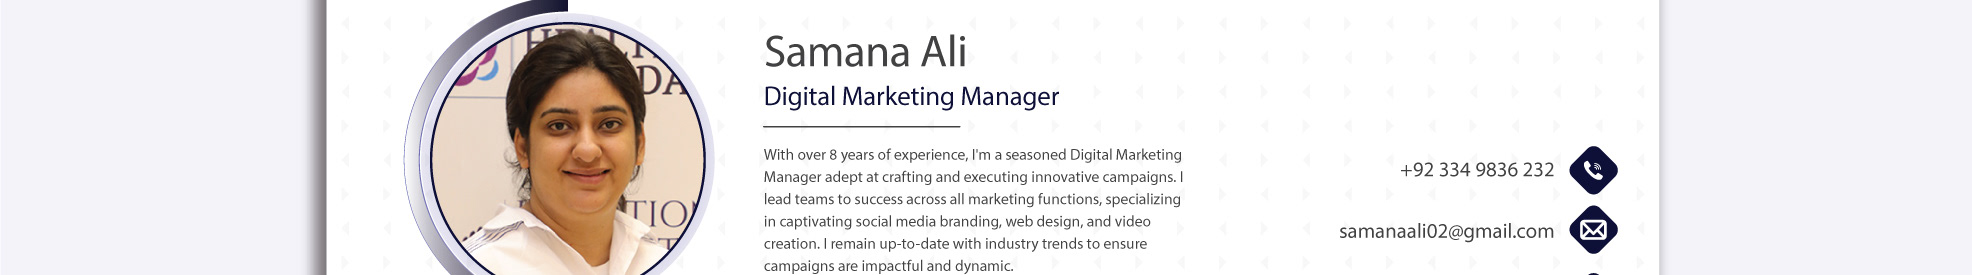 Samana Ali's profile banner